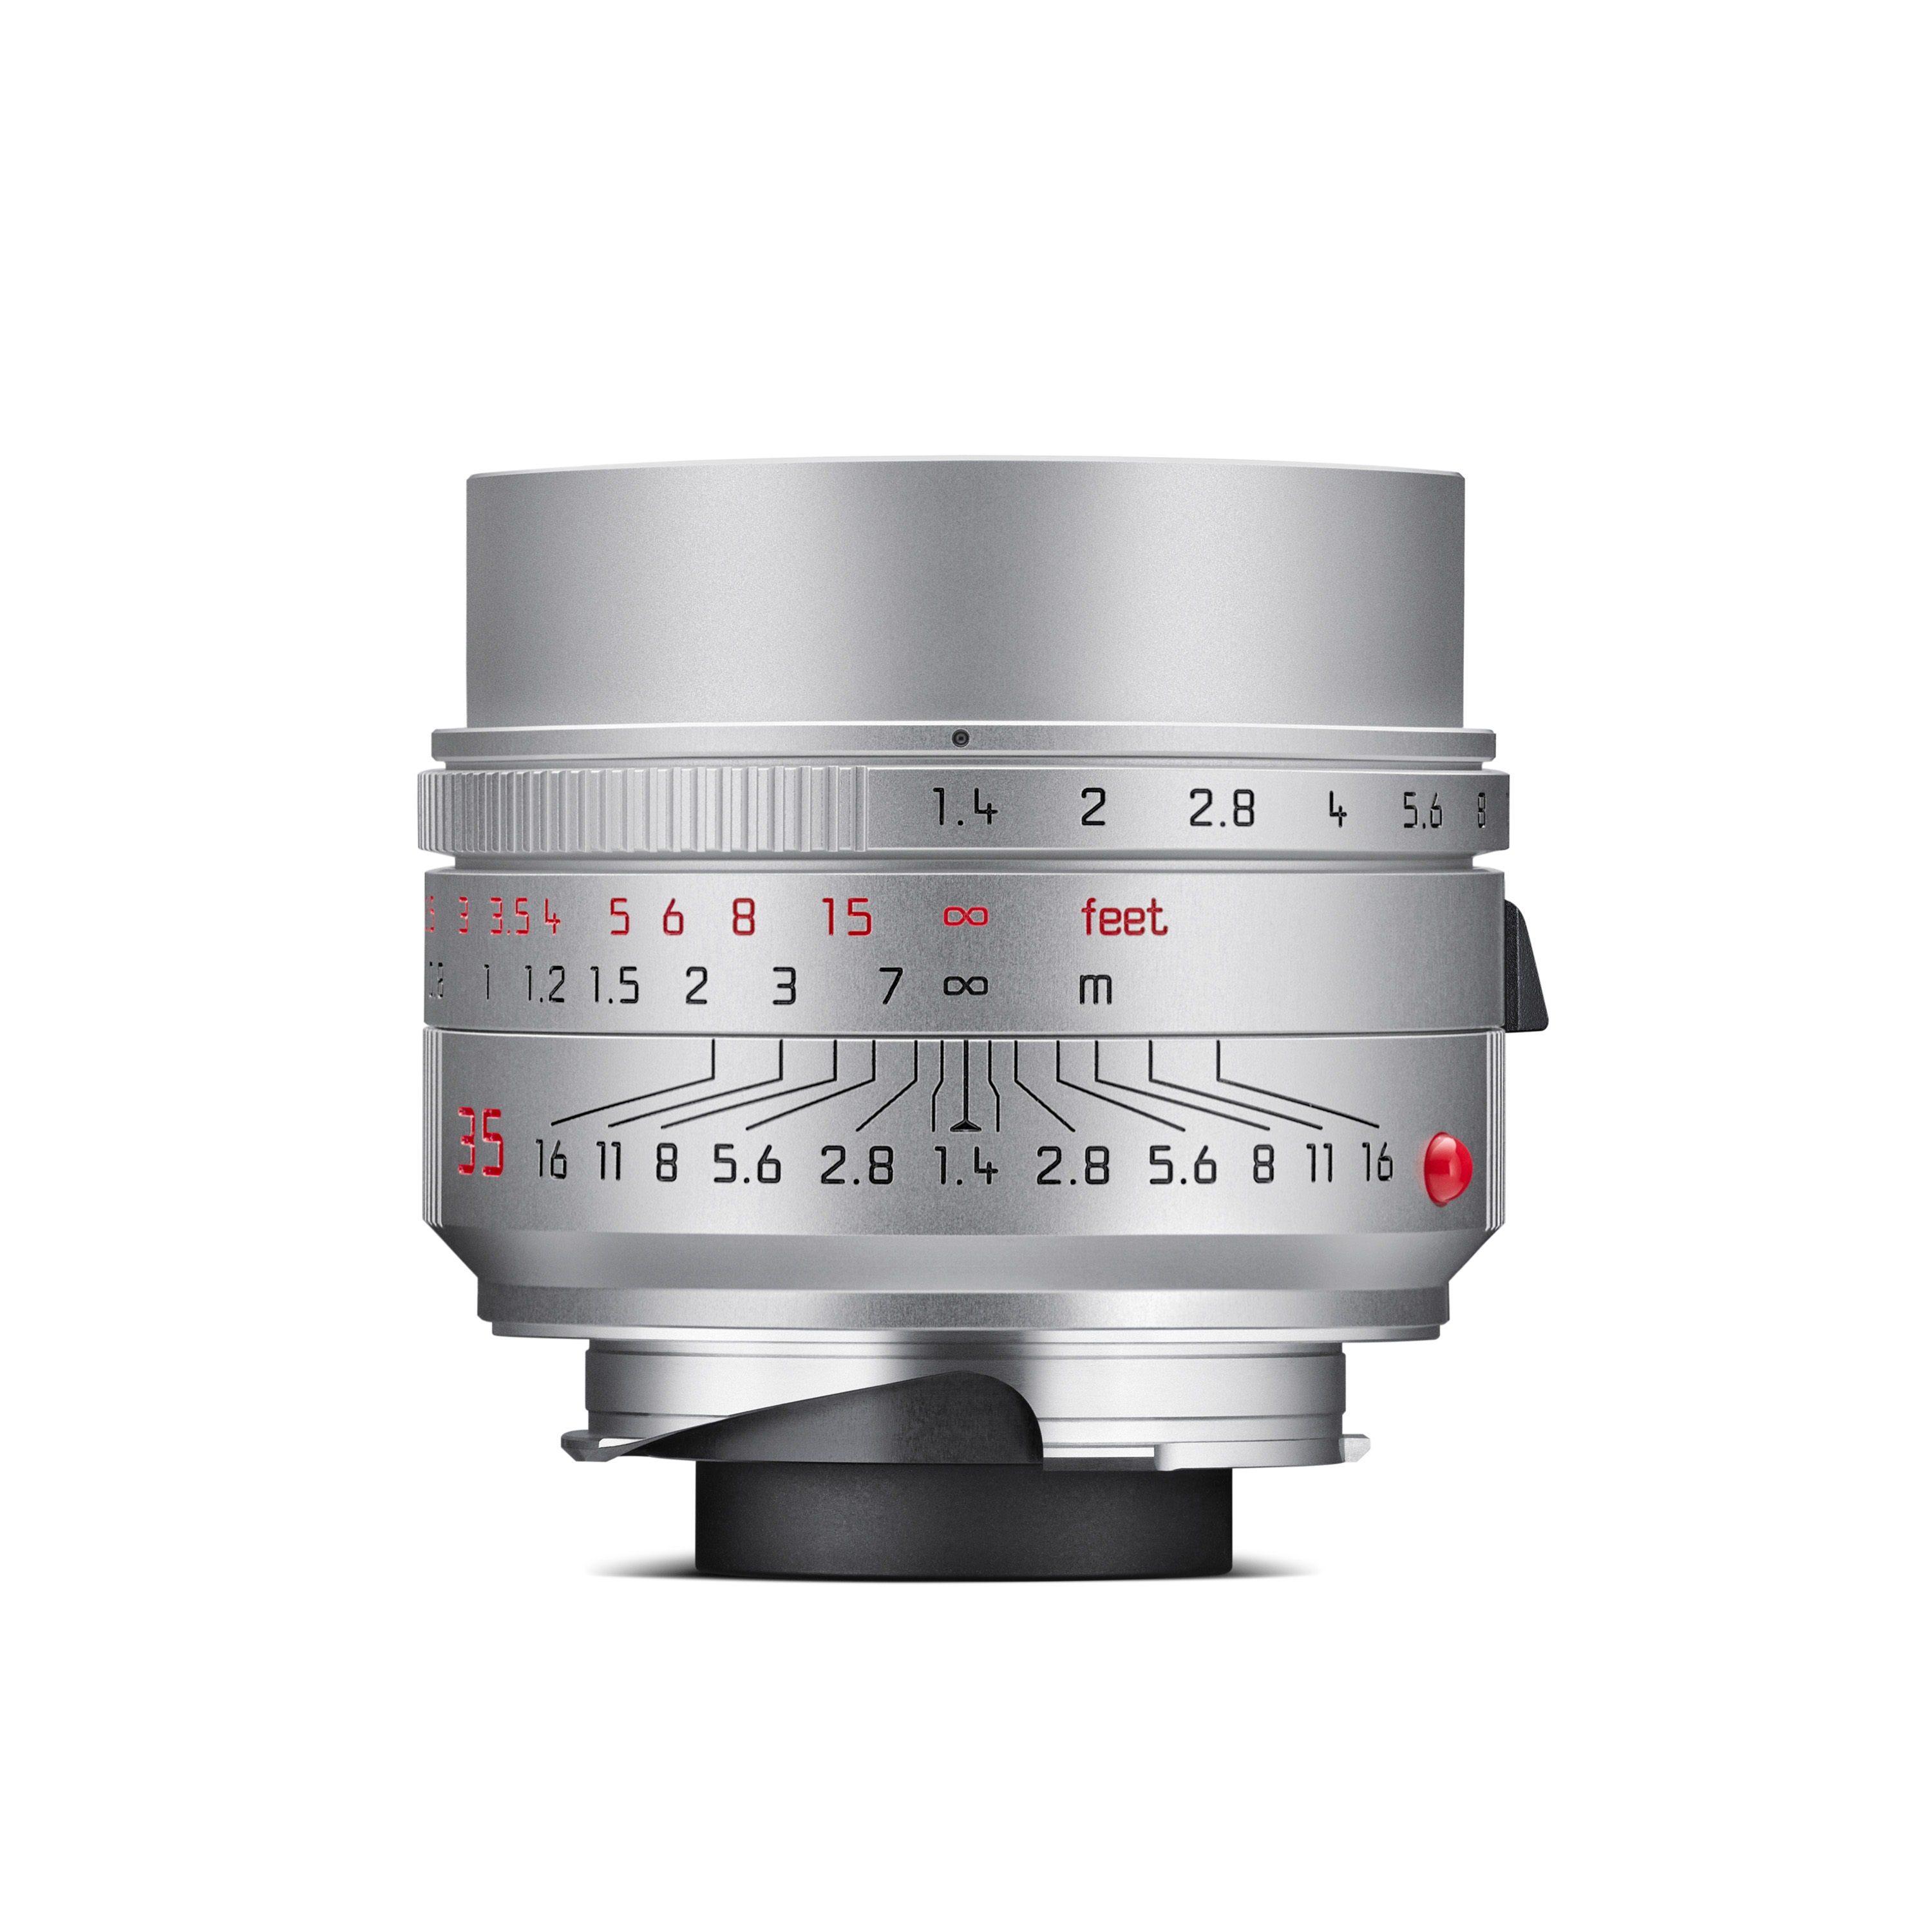 Summilux-M 35mm F1.4 ASPH. (silber) – Leica M-Mount